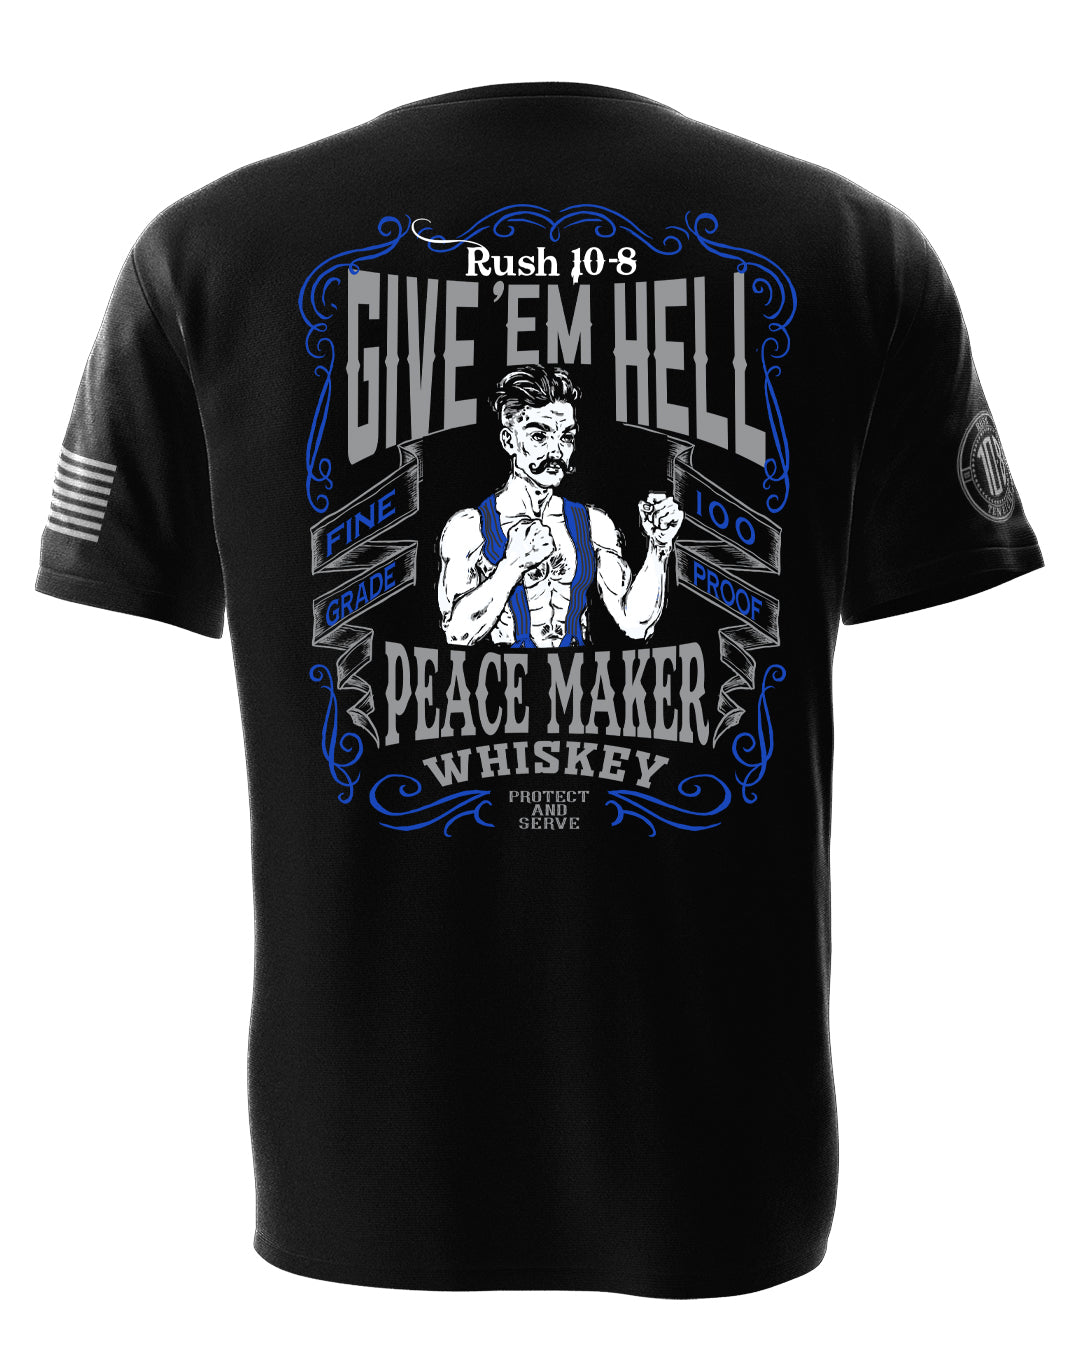 Give' Em Hell Peace Maker Men's Tee